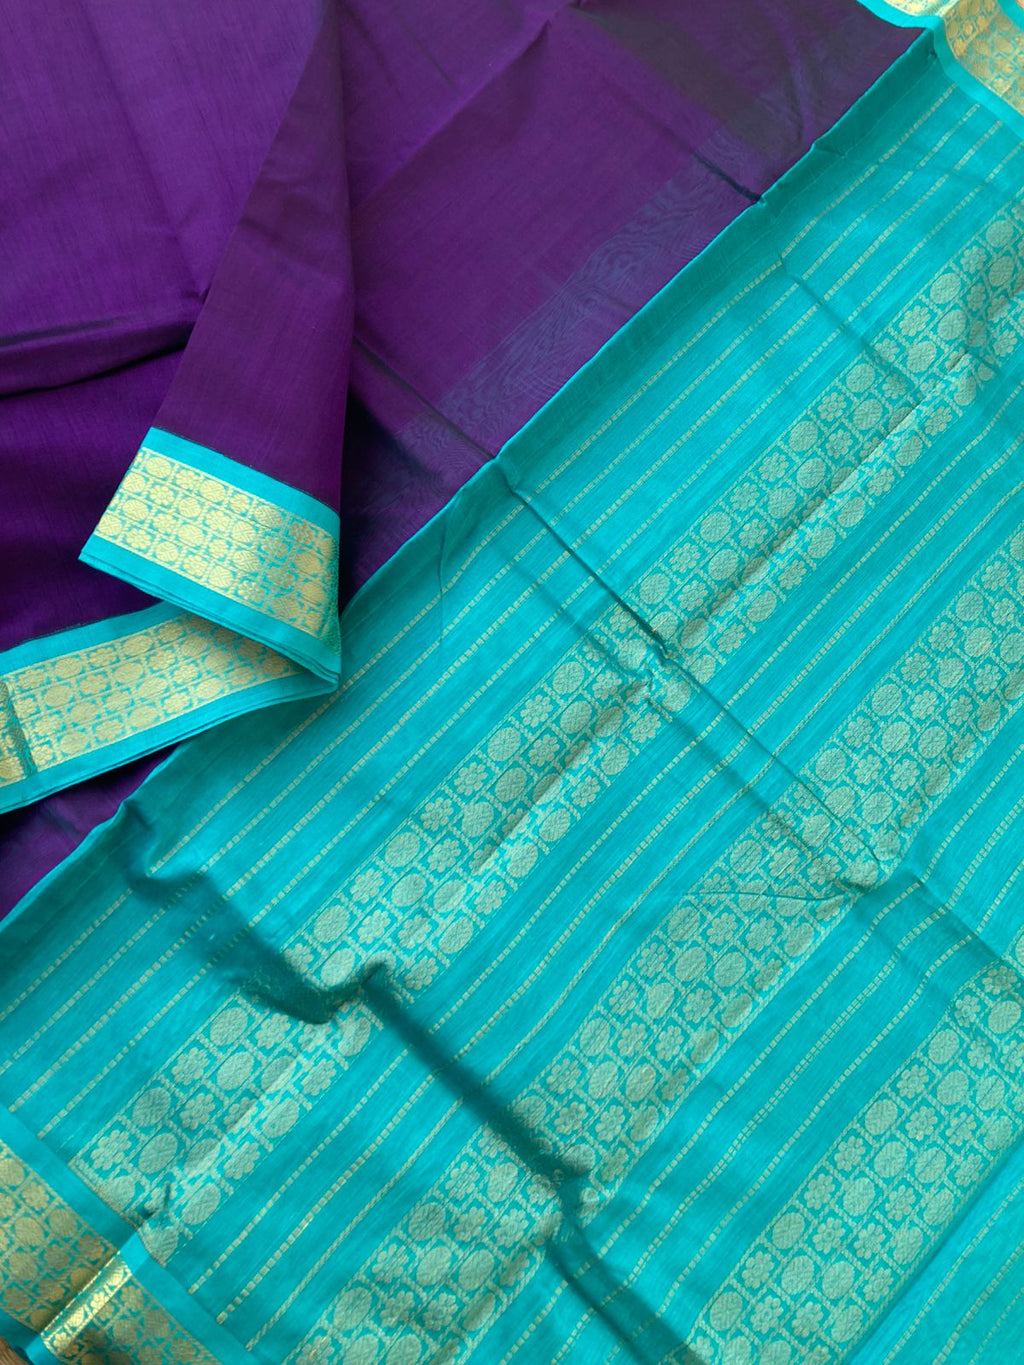 Korvai Silk Cottons - deep purple and aqua